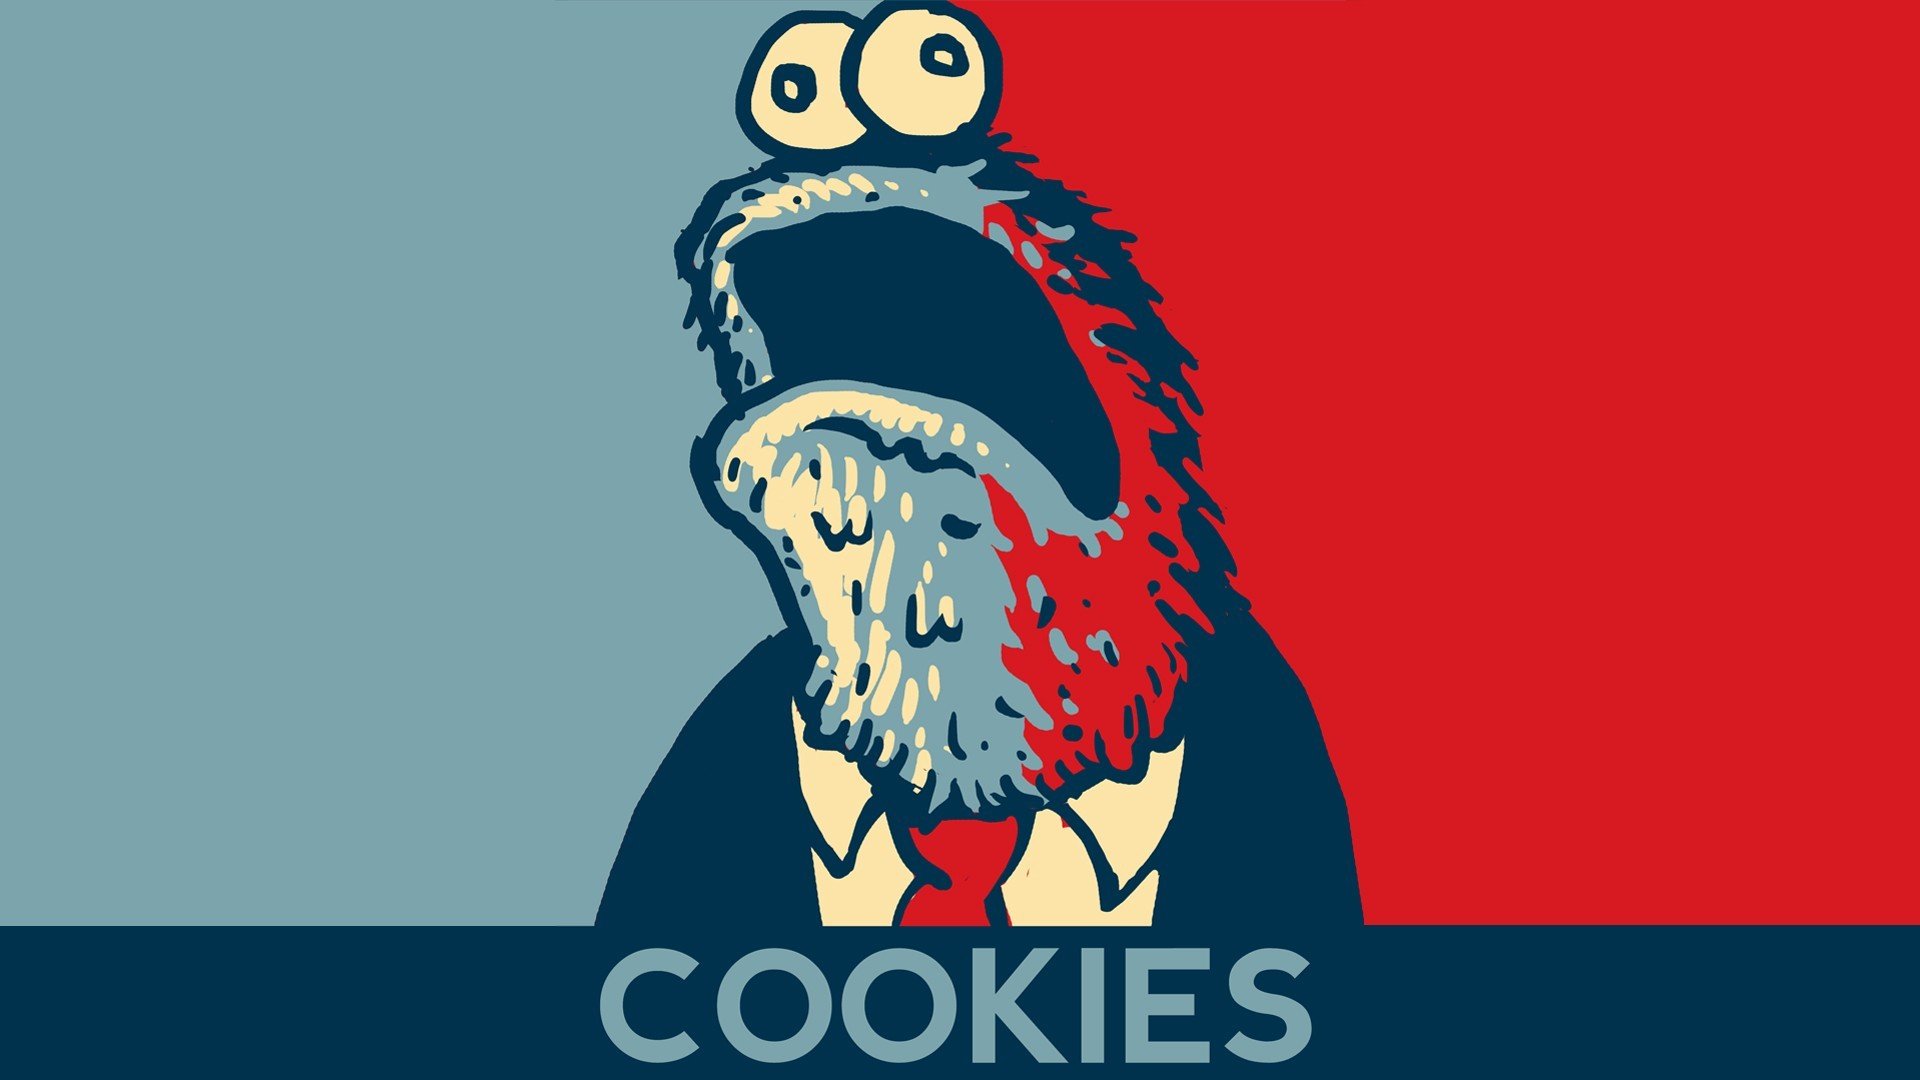 Cookie Monster, Cookies Wallpaper